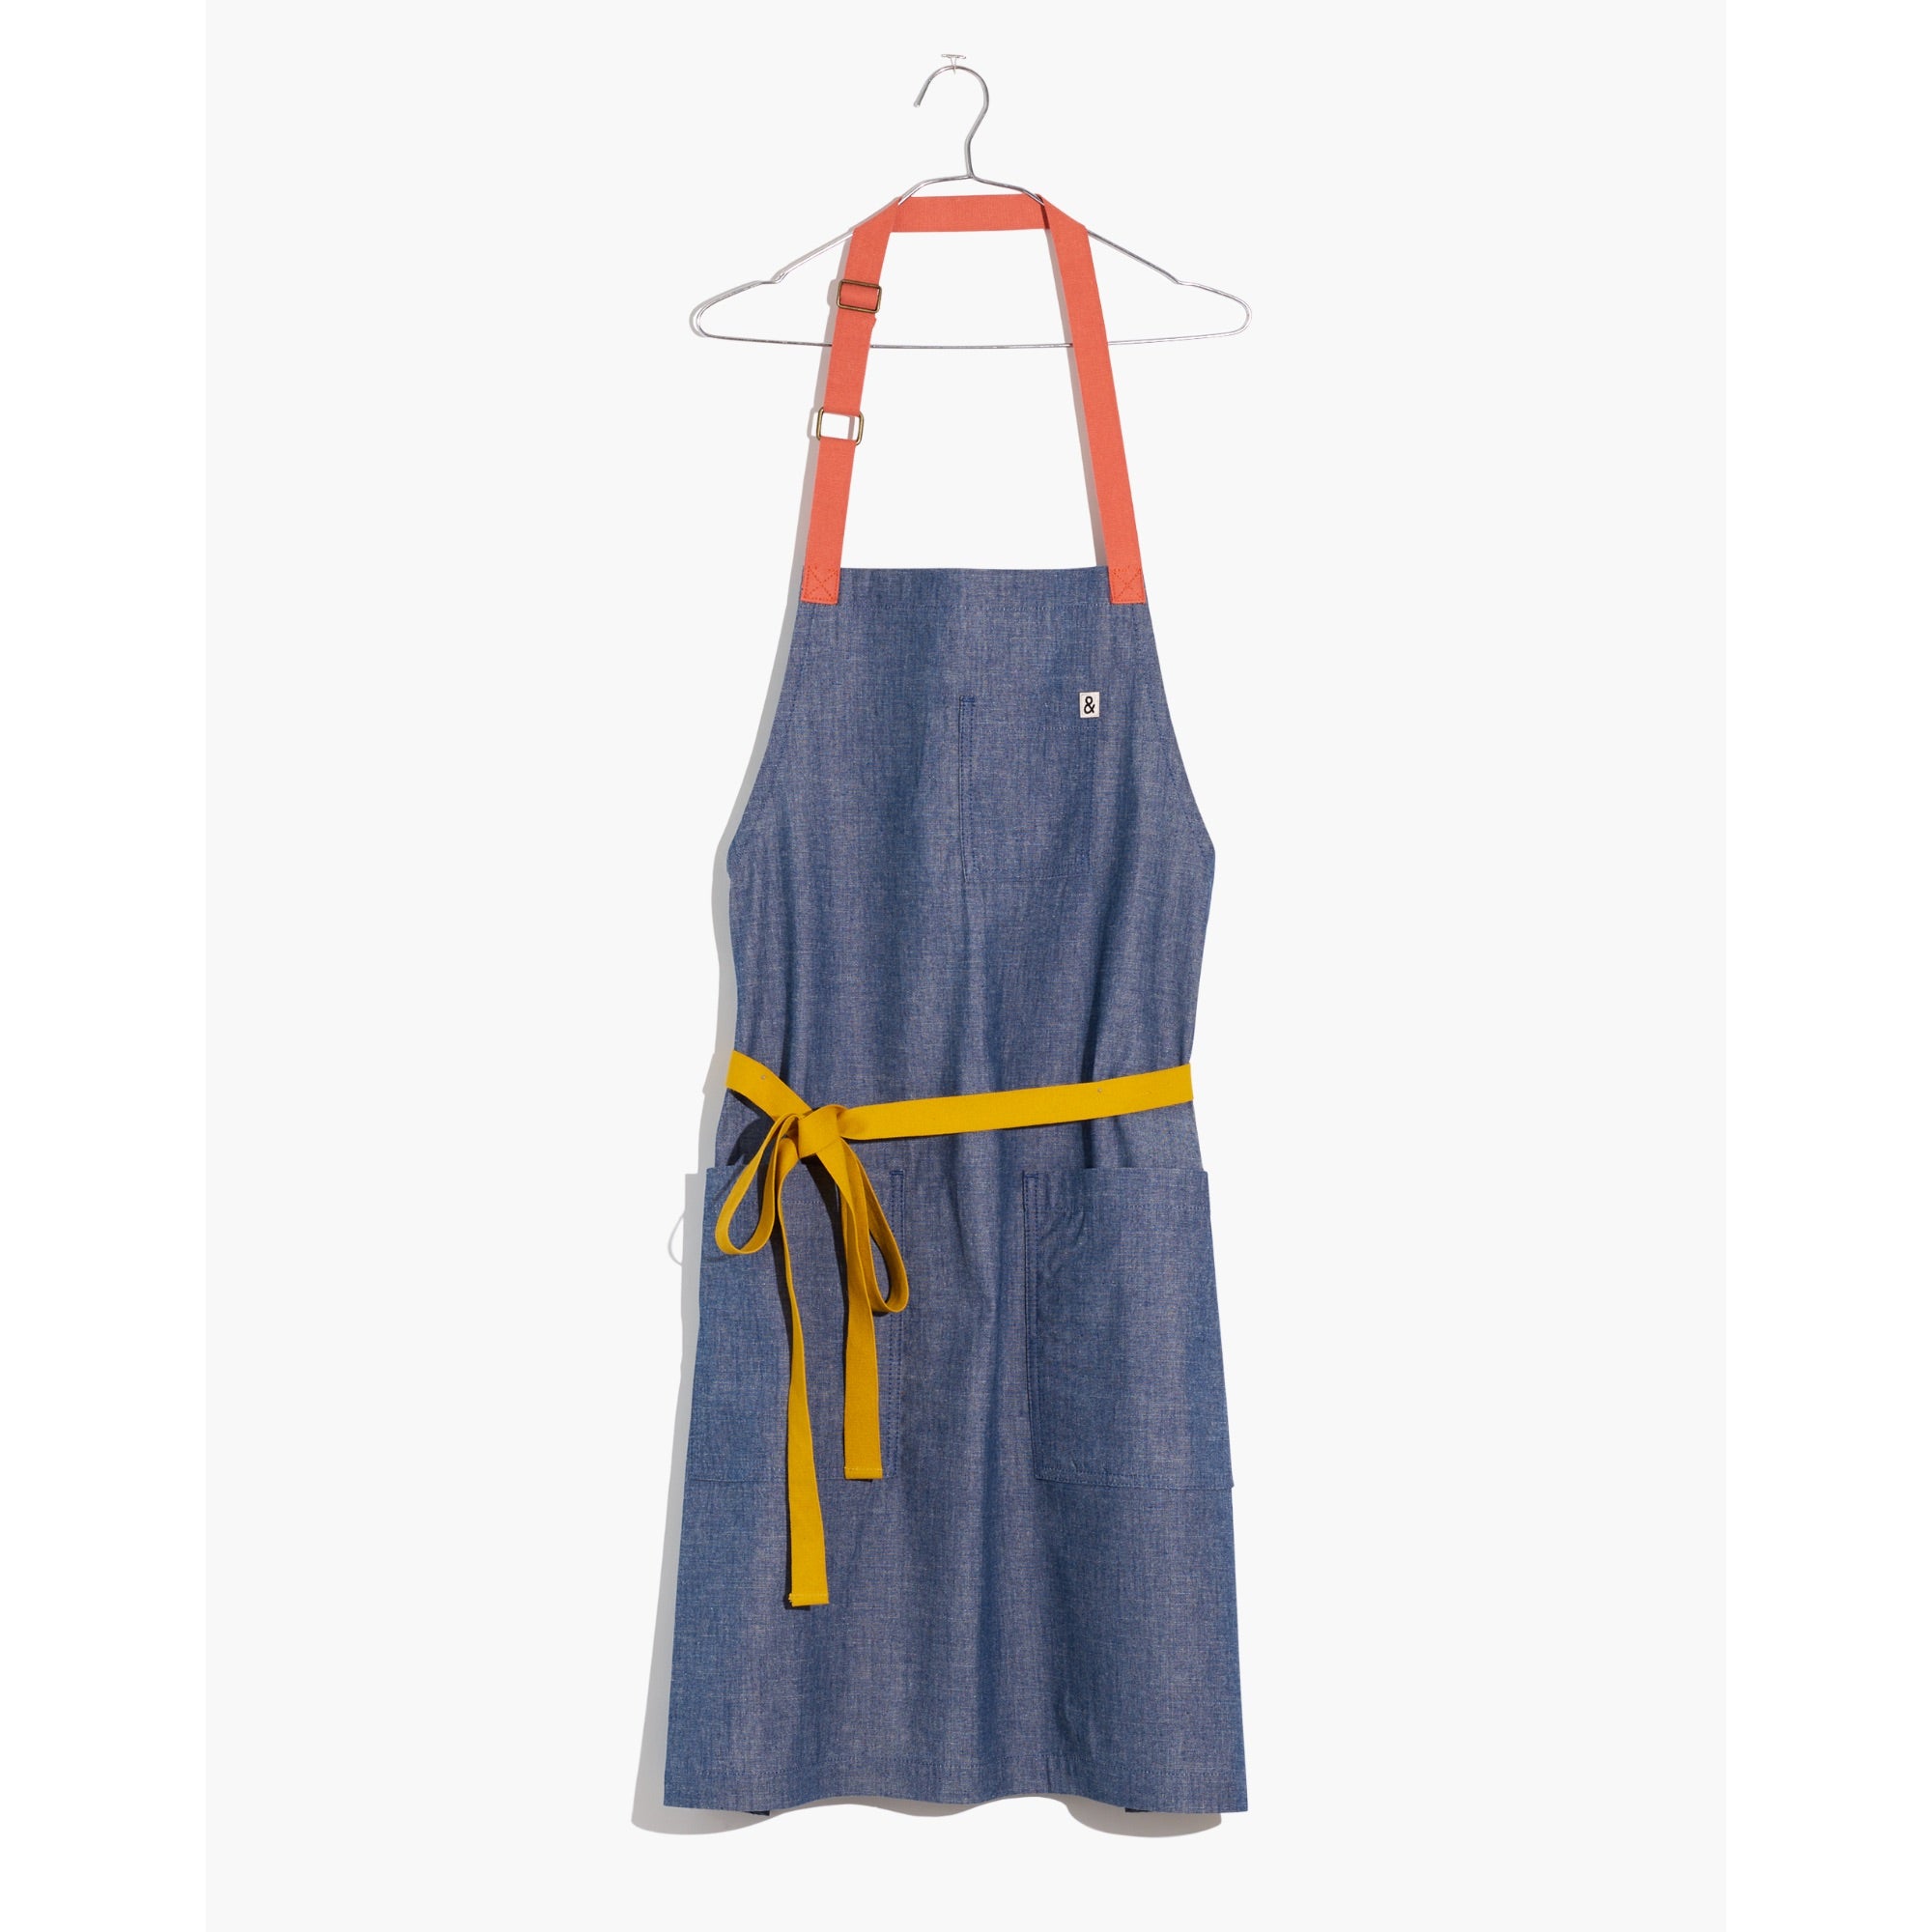 denim apron with orange straps